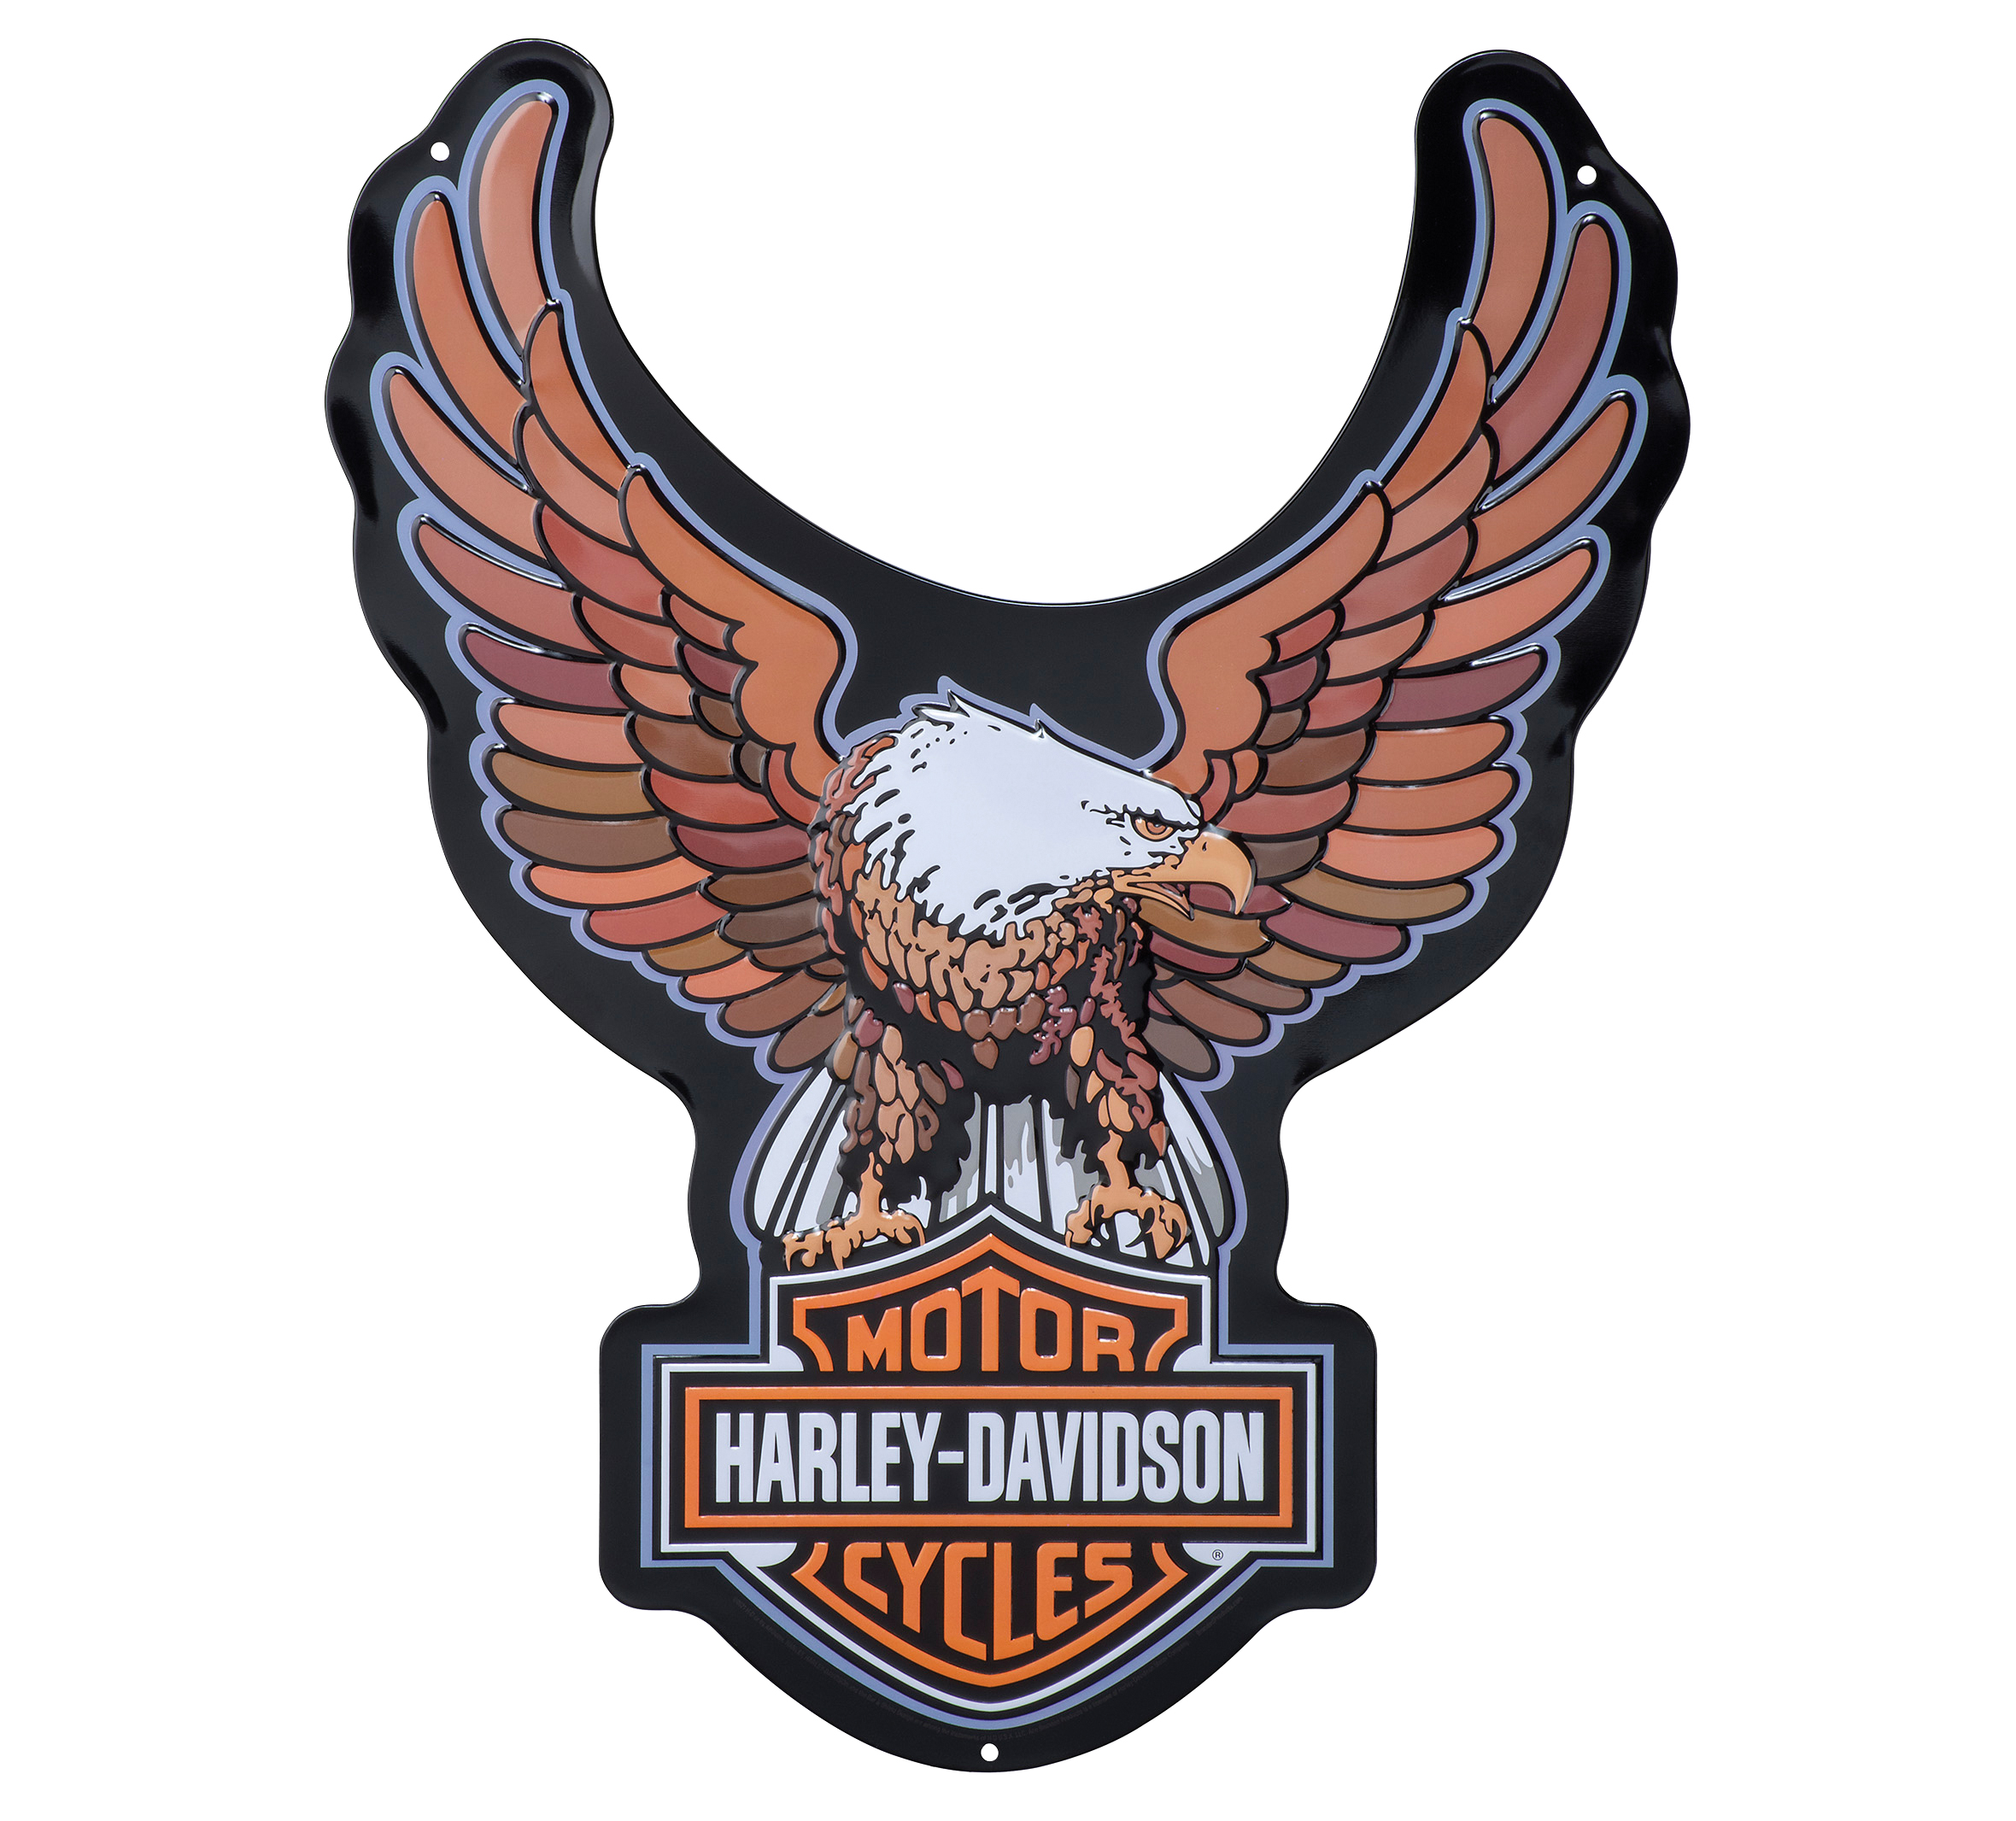 Harley Davidson Eagle metal wall sign